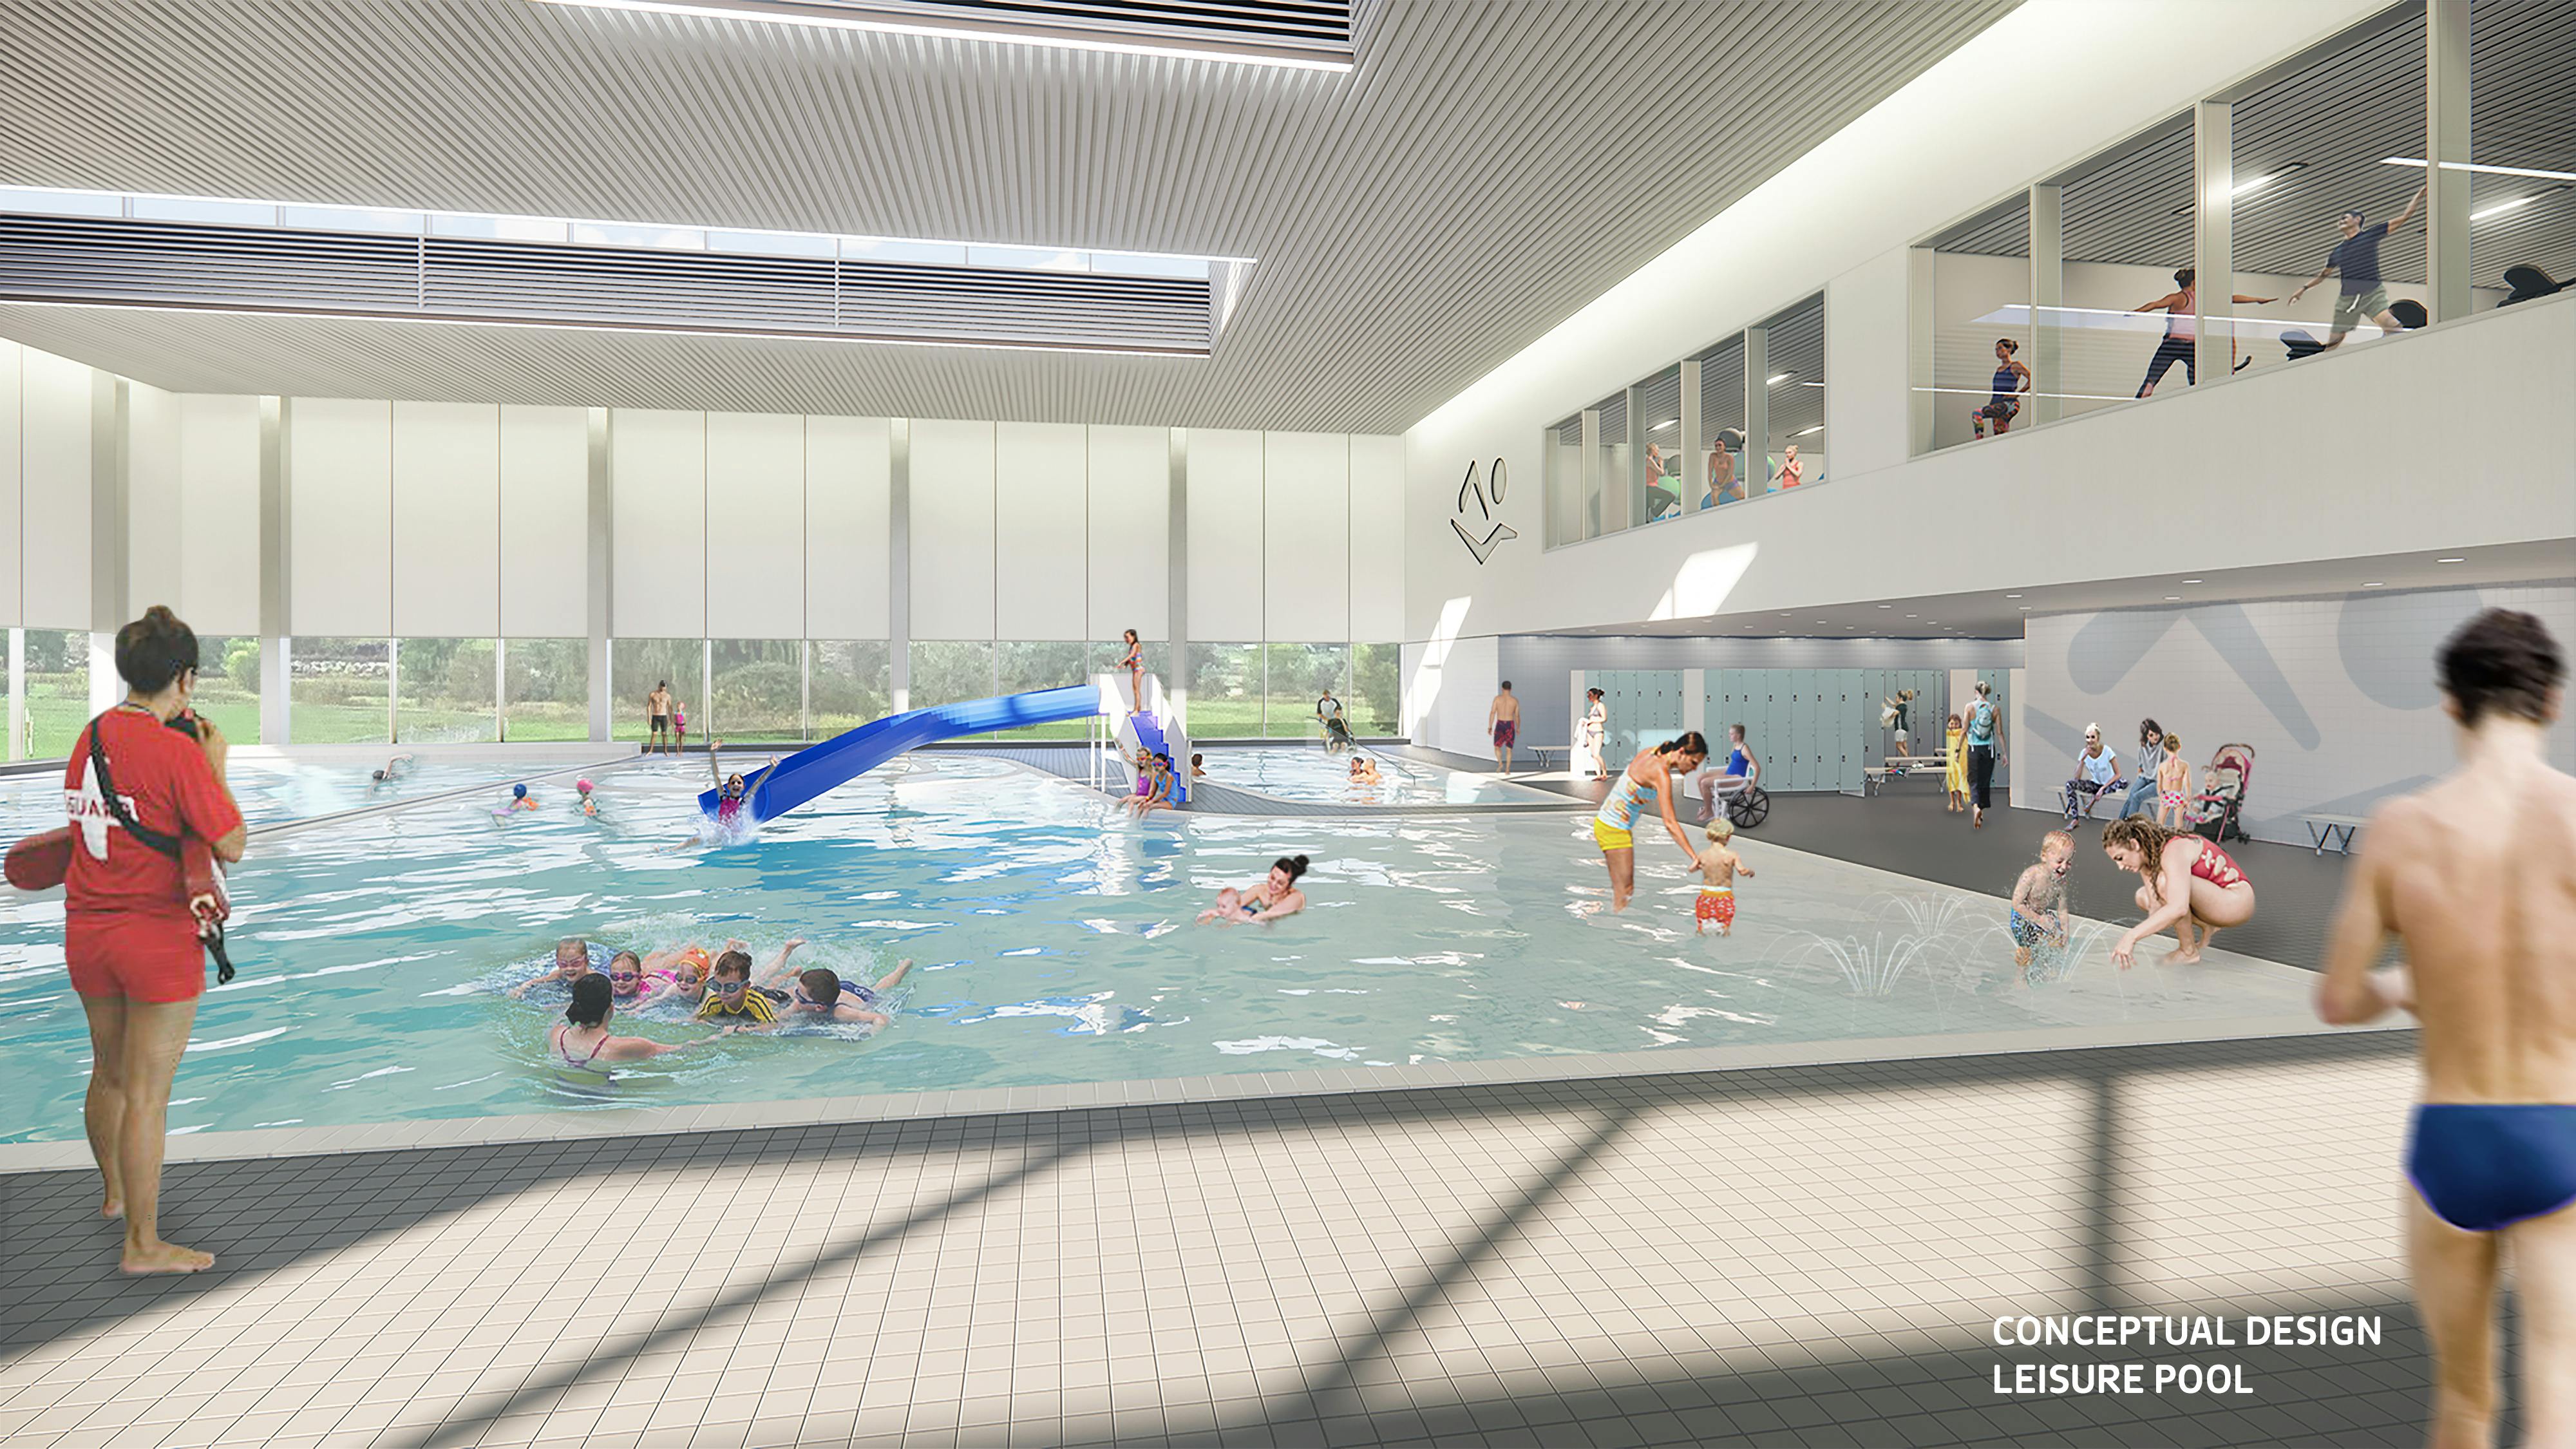 Leisure pool conceptual design